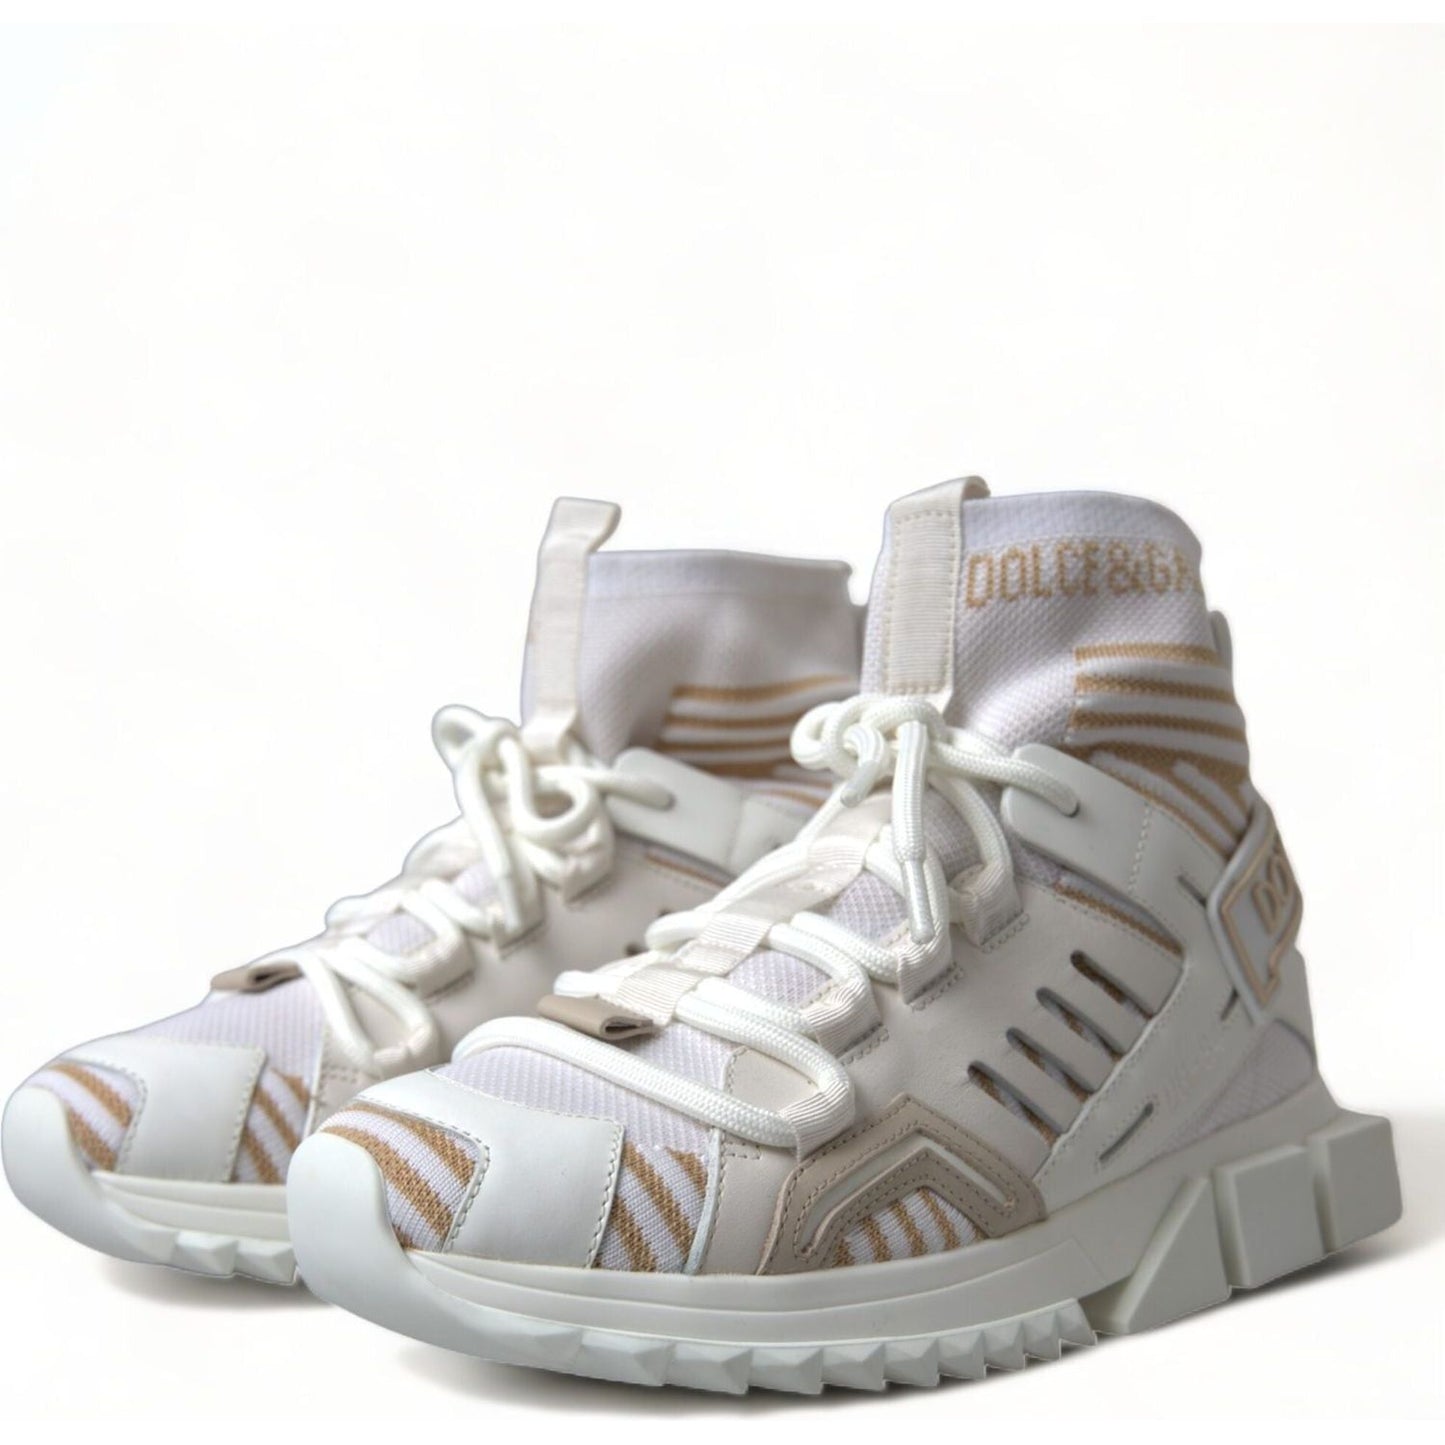 Dolce & Gabbana Elegant Sorrento Slip-On Sneakers in White and Beige white-beige-sorrento-socks-sneakers-shoes-1 465A2444-BG-scaled-50643736-9f1.jpg